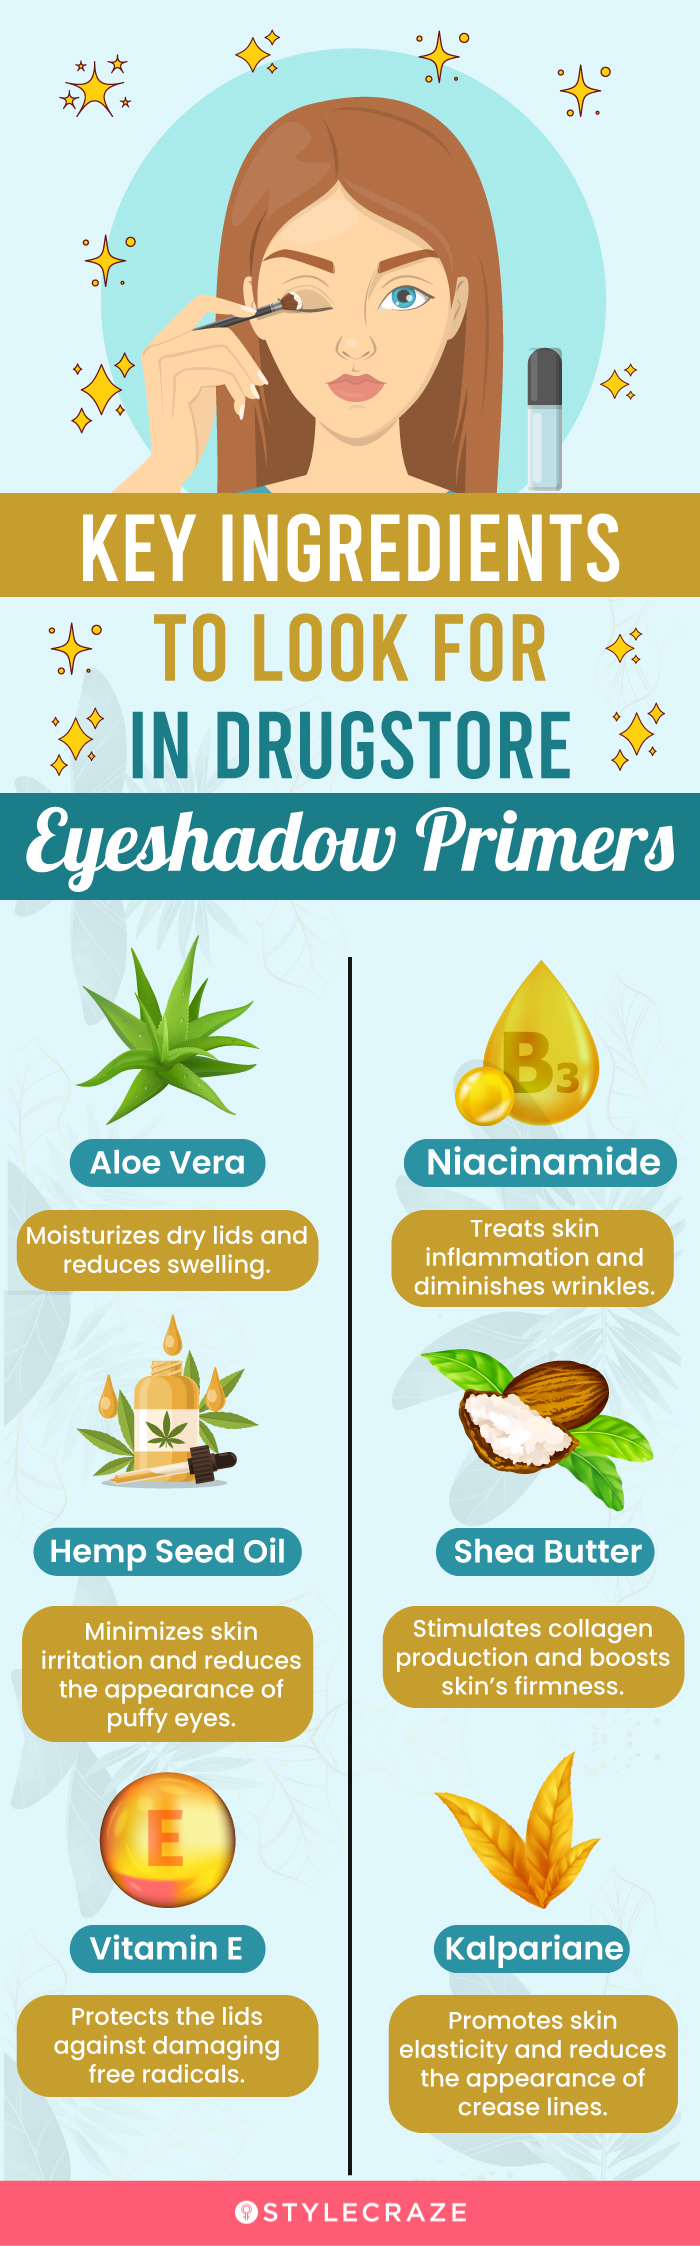 Key Ingredients To Look For In Drugstore Eyeshadow Primers (infographic)